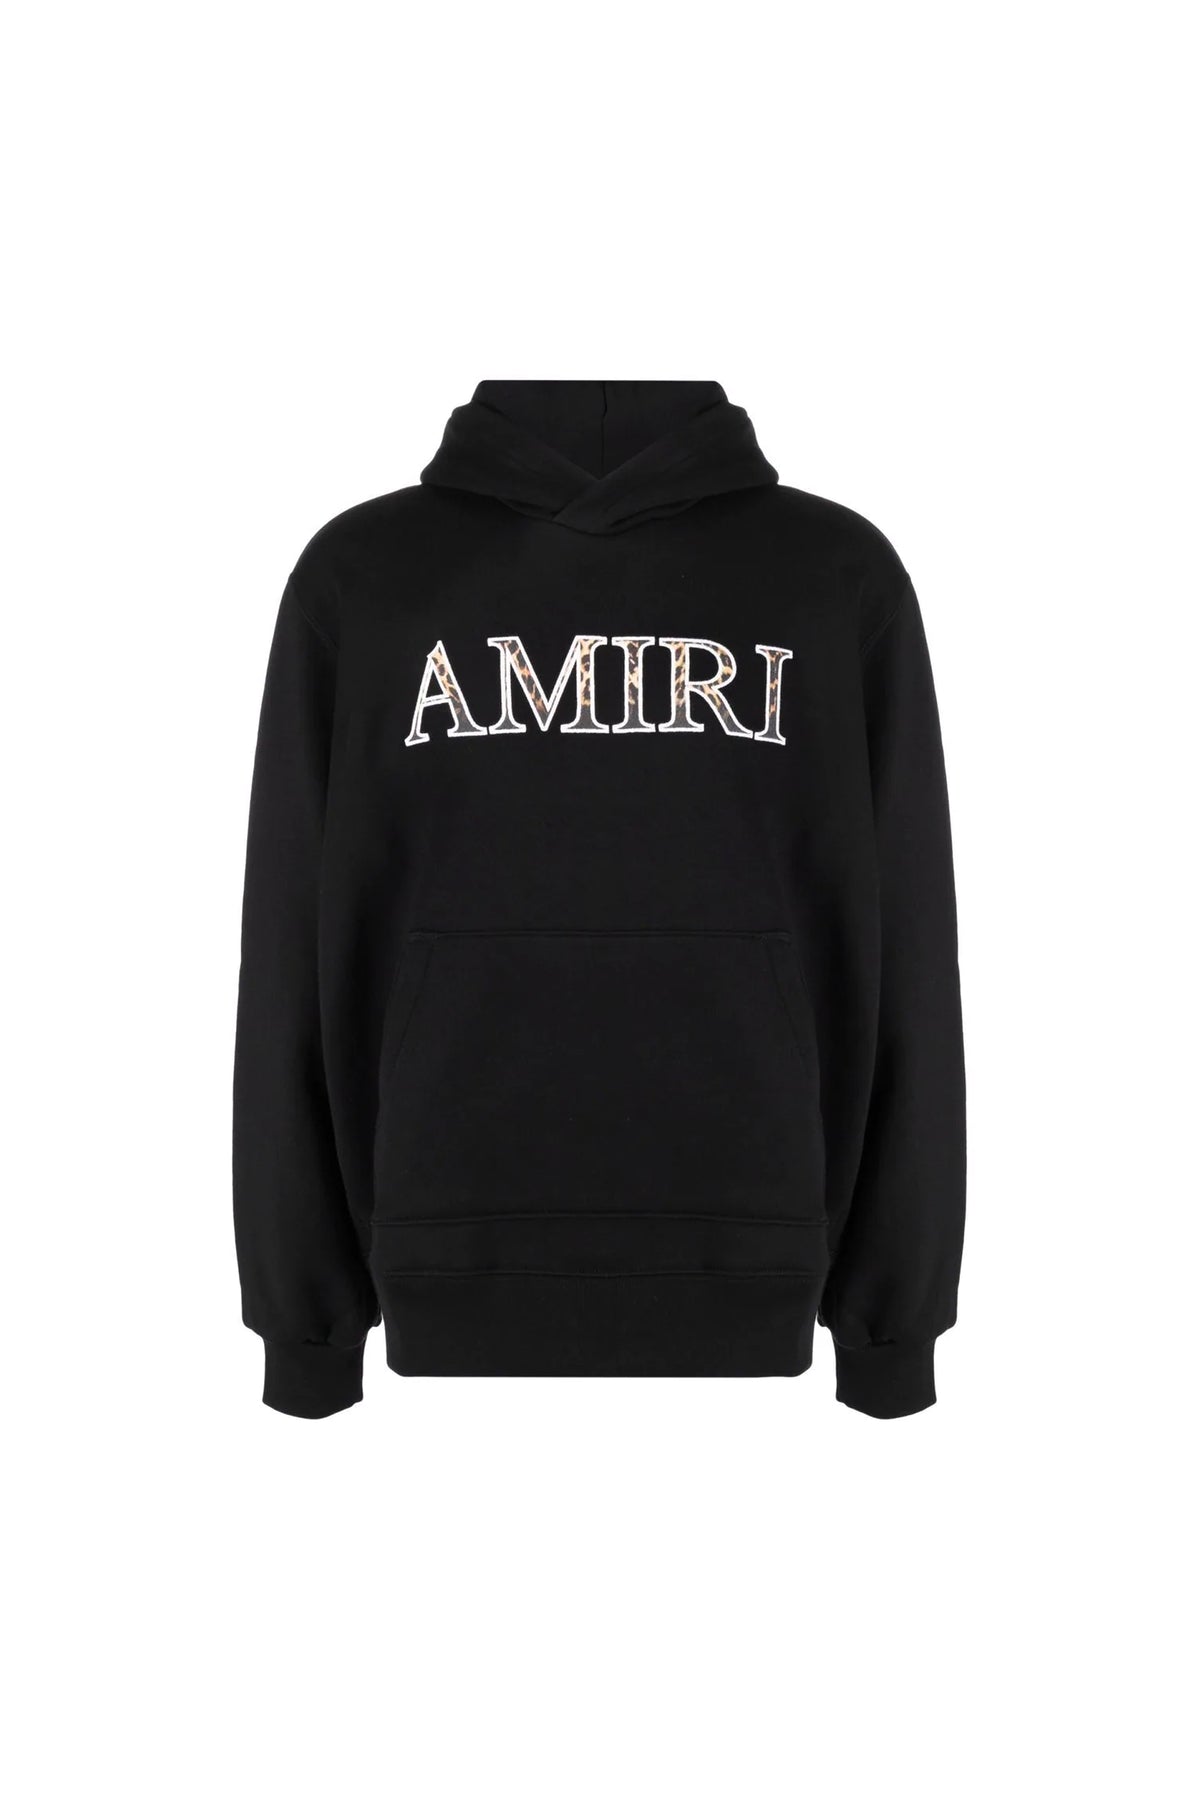 Amiri embroidered leopard logo hoodie